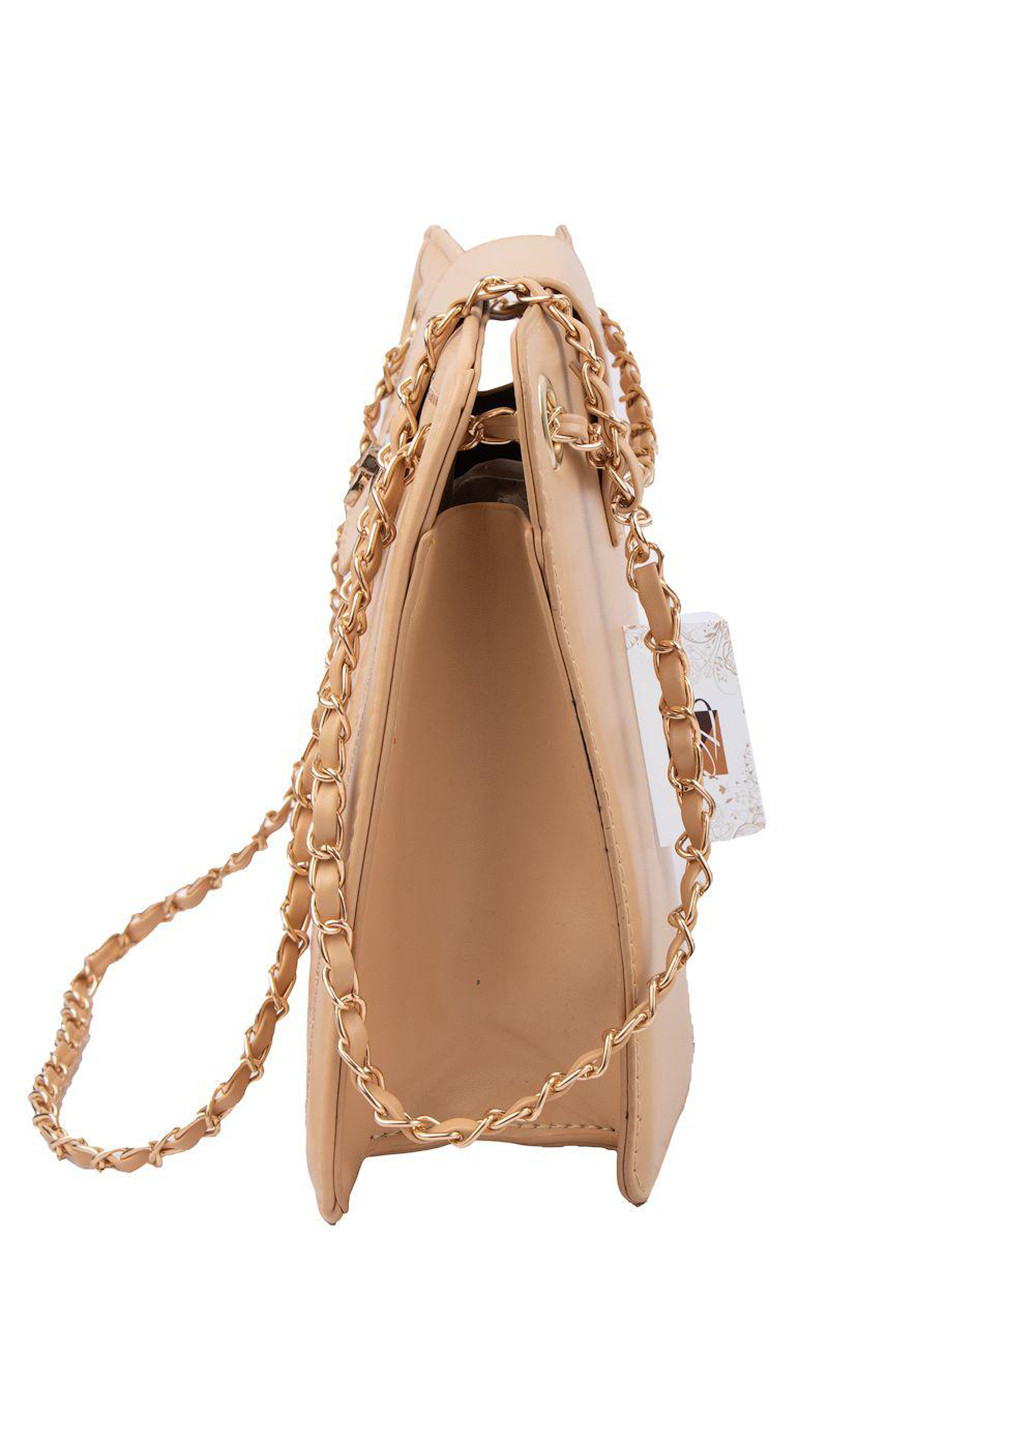 Женская сумка-клатч 21х19х8 см Valiria Fashion (232989998)